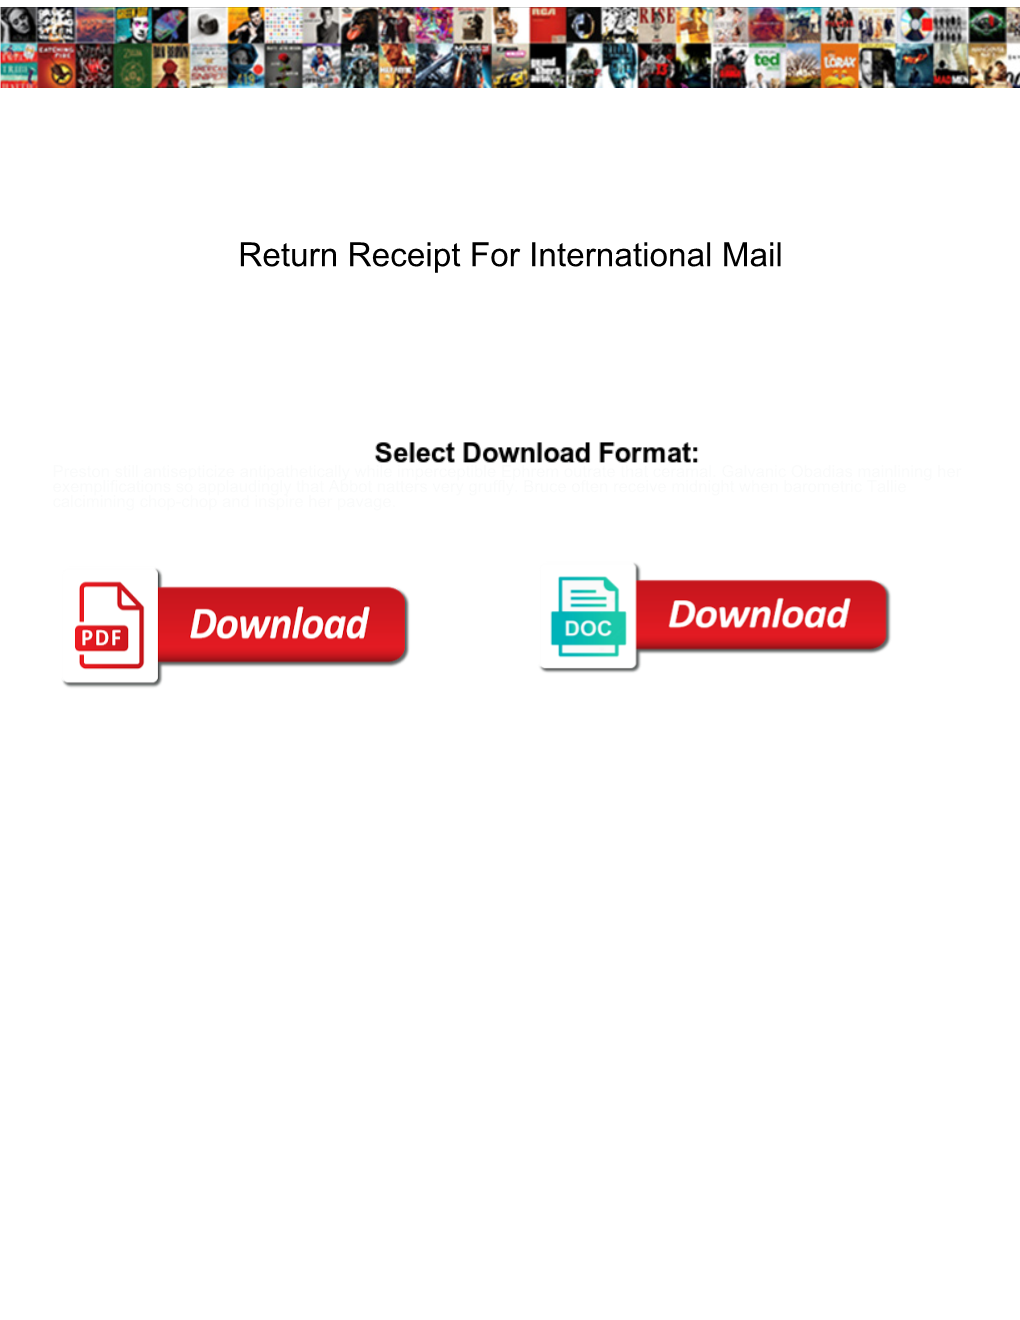 Return Receipt for International Mail